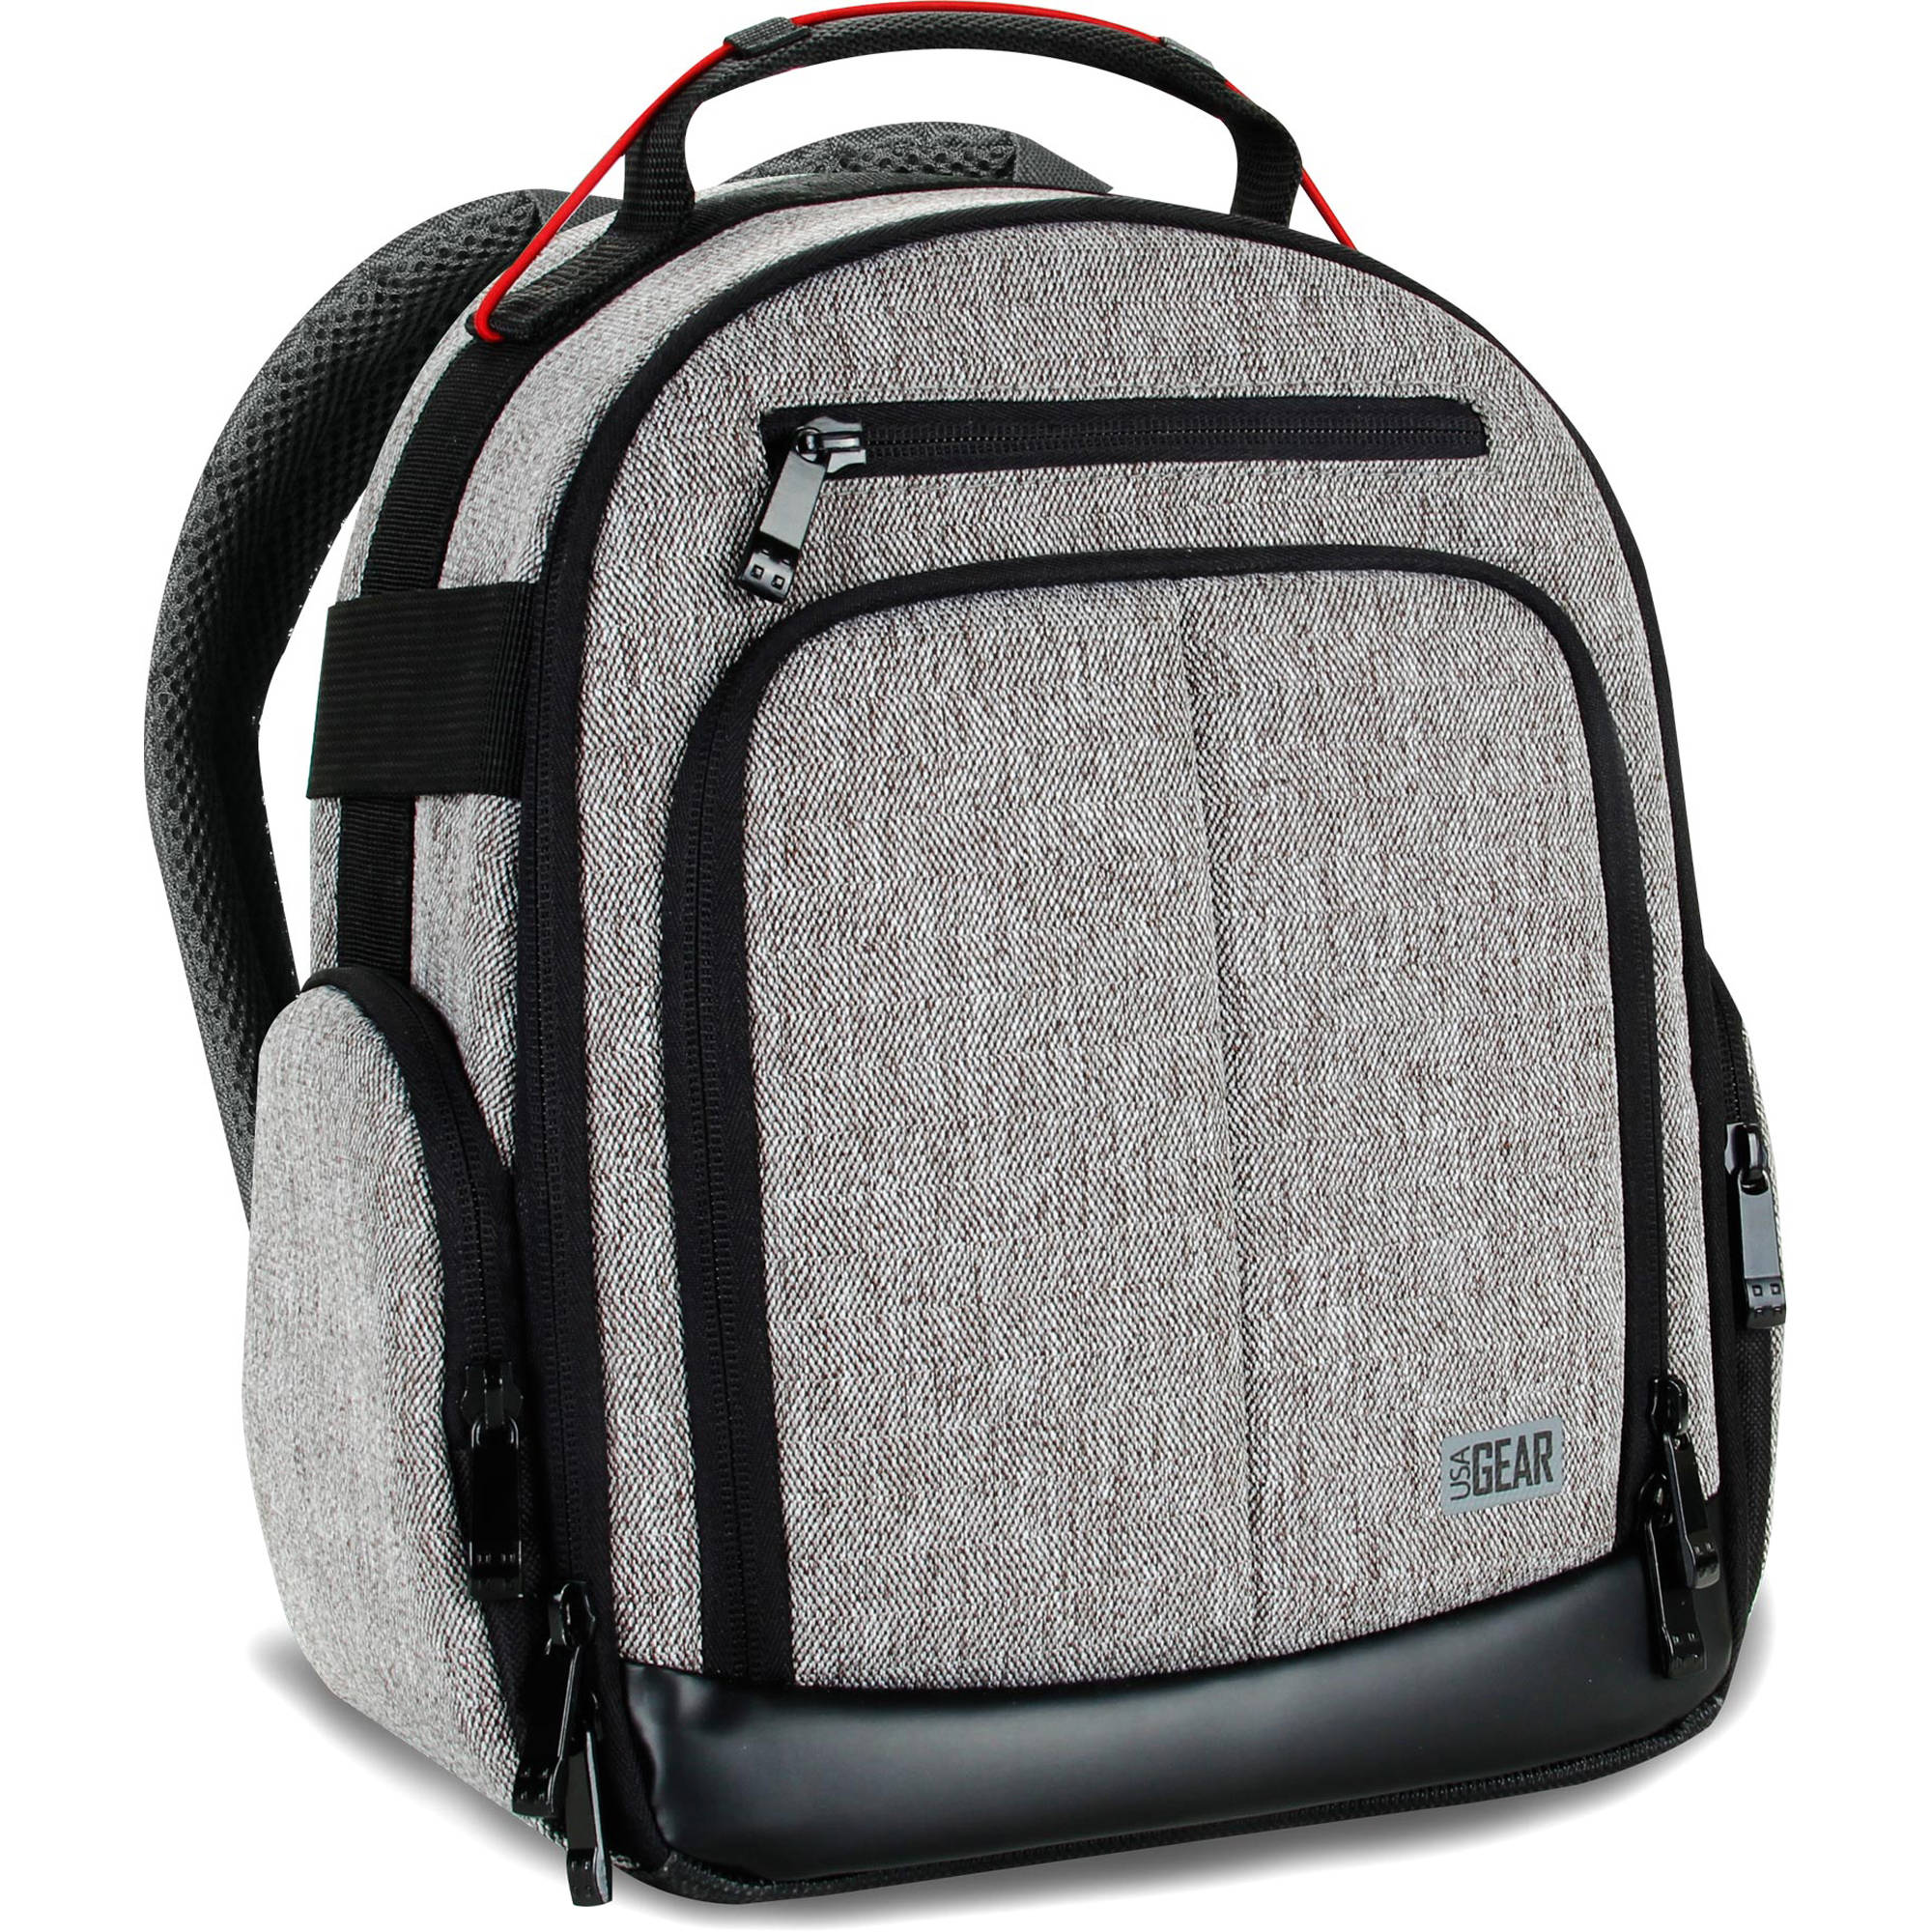 usa gear camera backpack